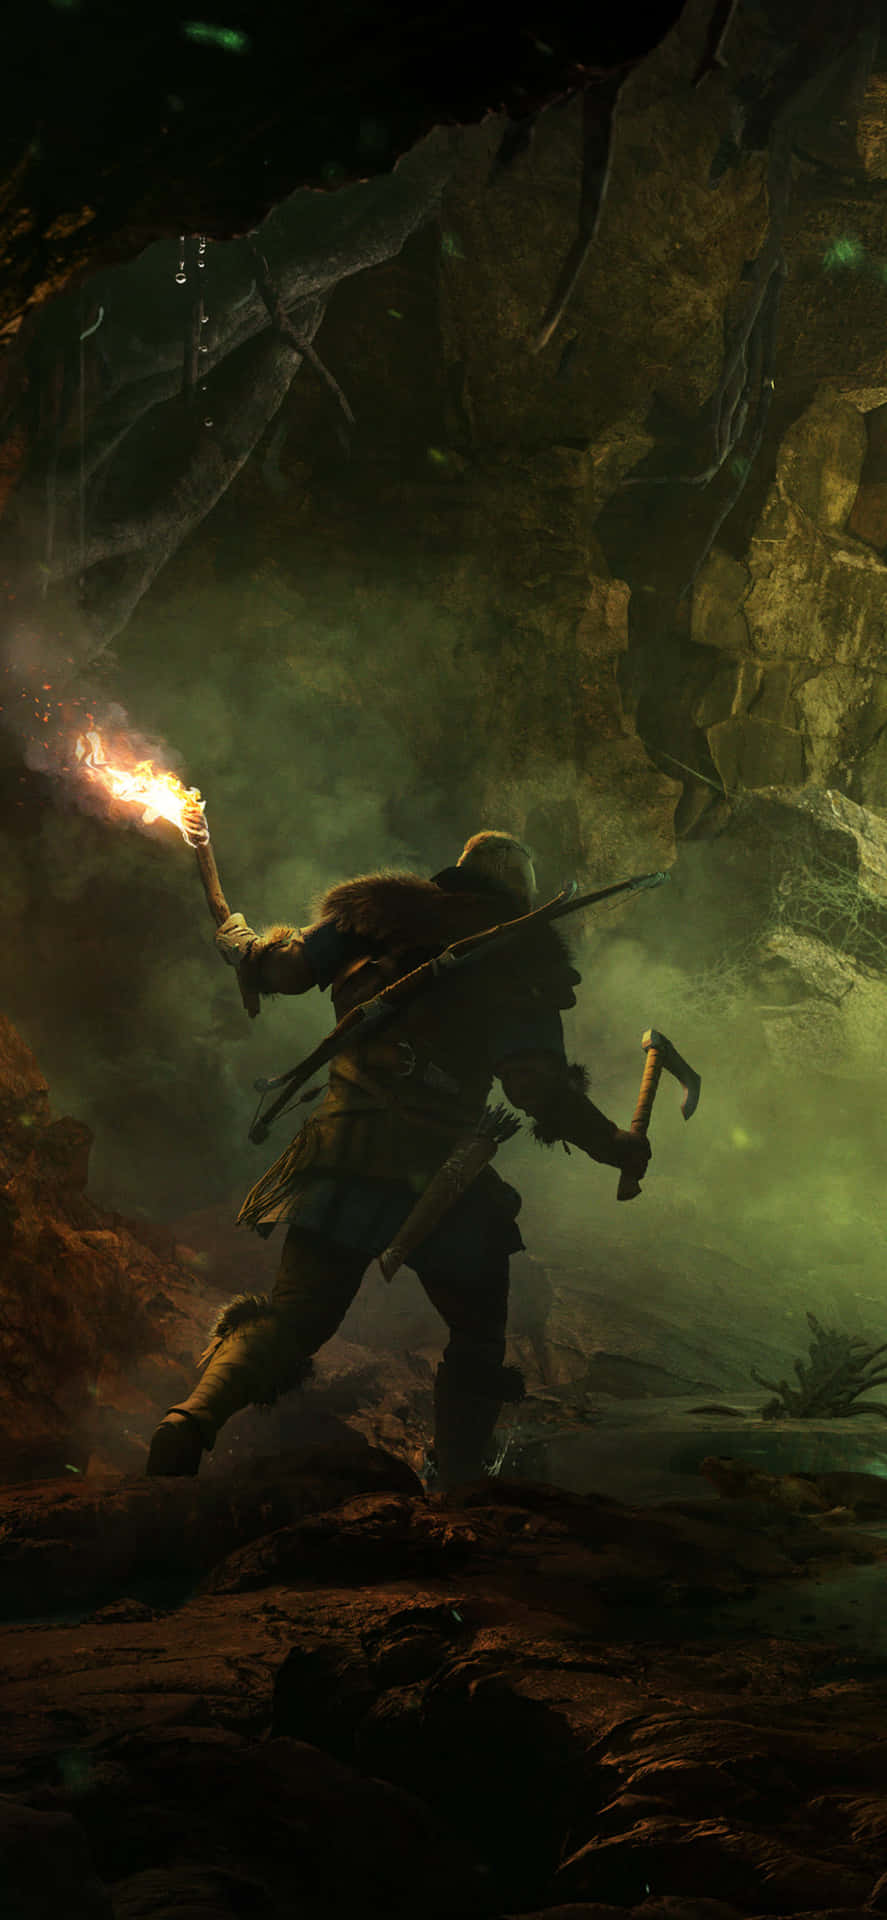 Mørk hule Iphone Xs Max Assassin's Creed Valhalla baggrund